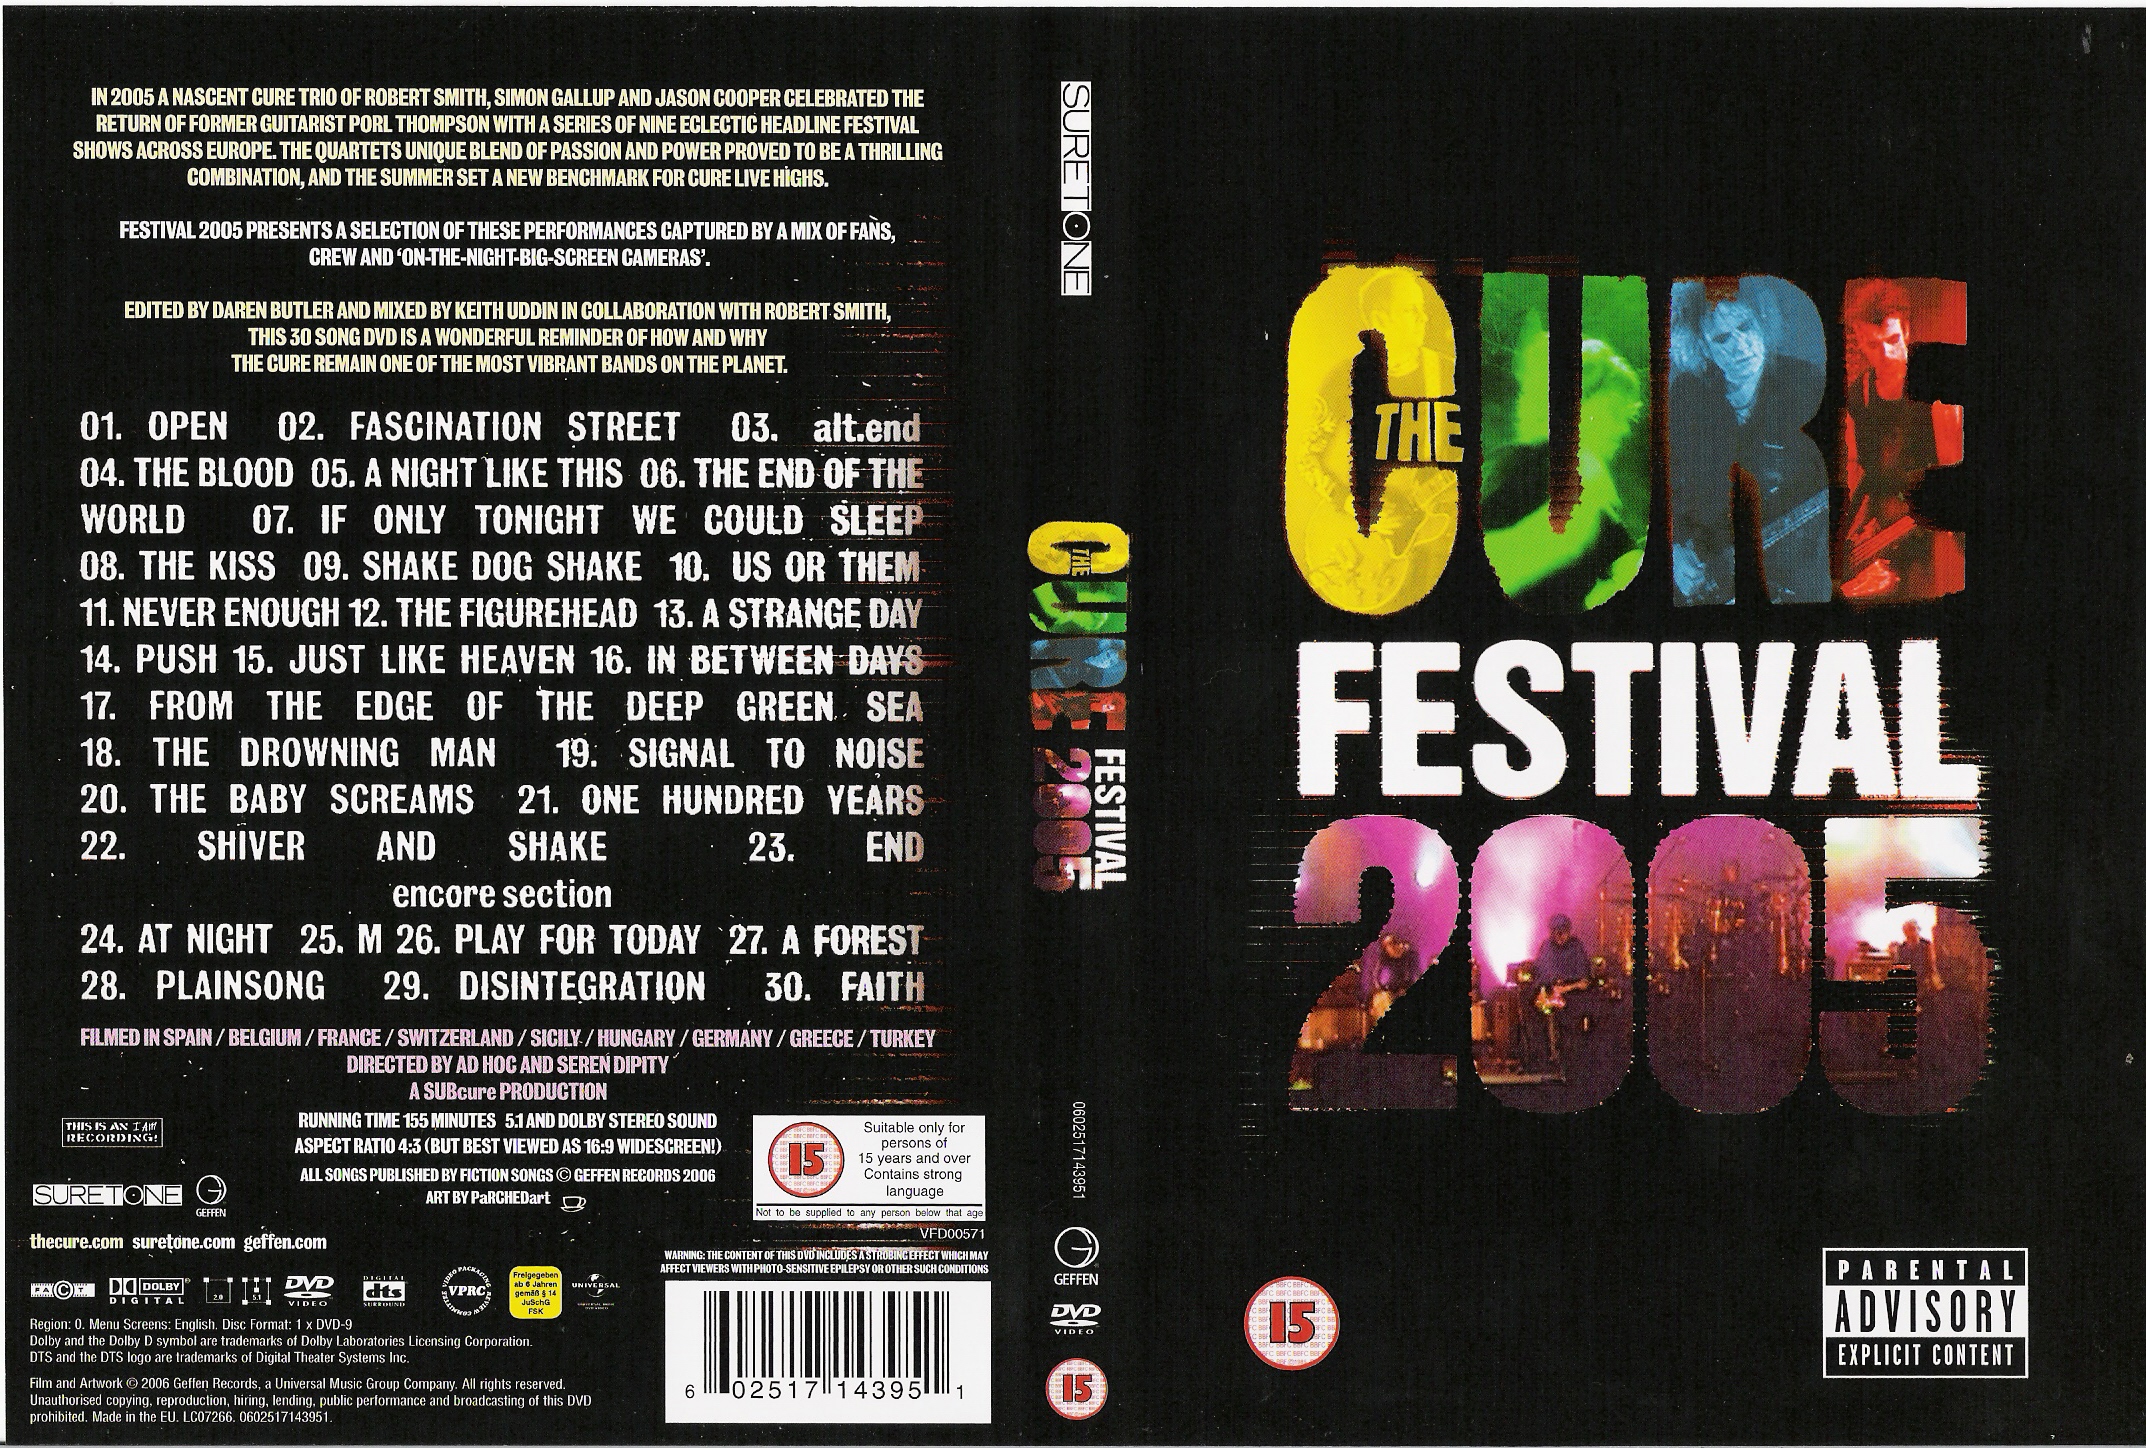 Jaquette DVD The cure festival 2005